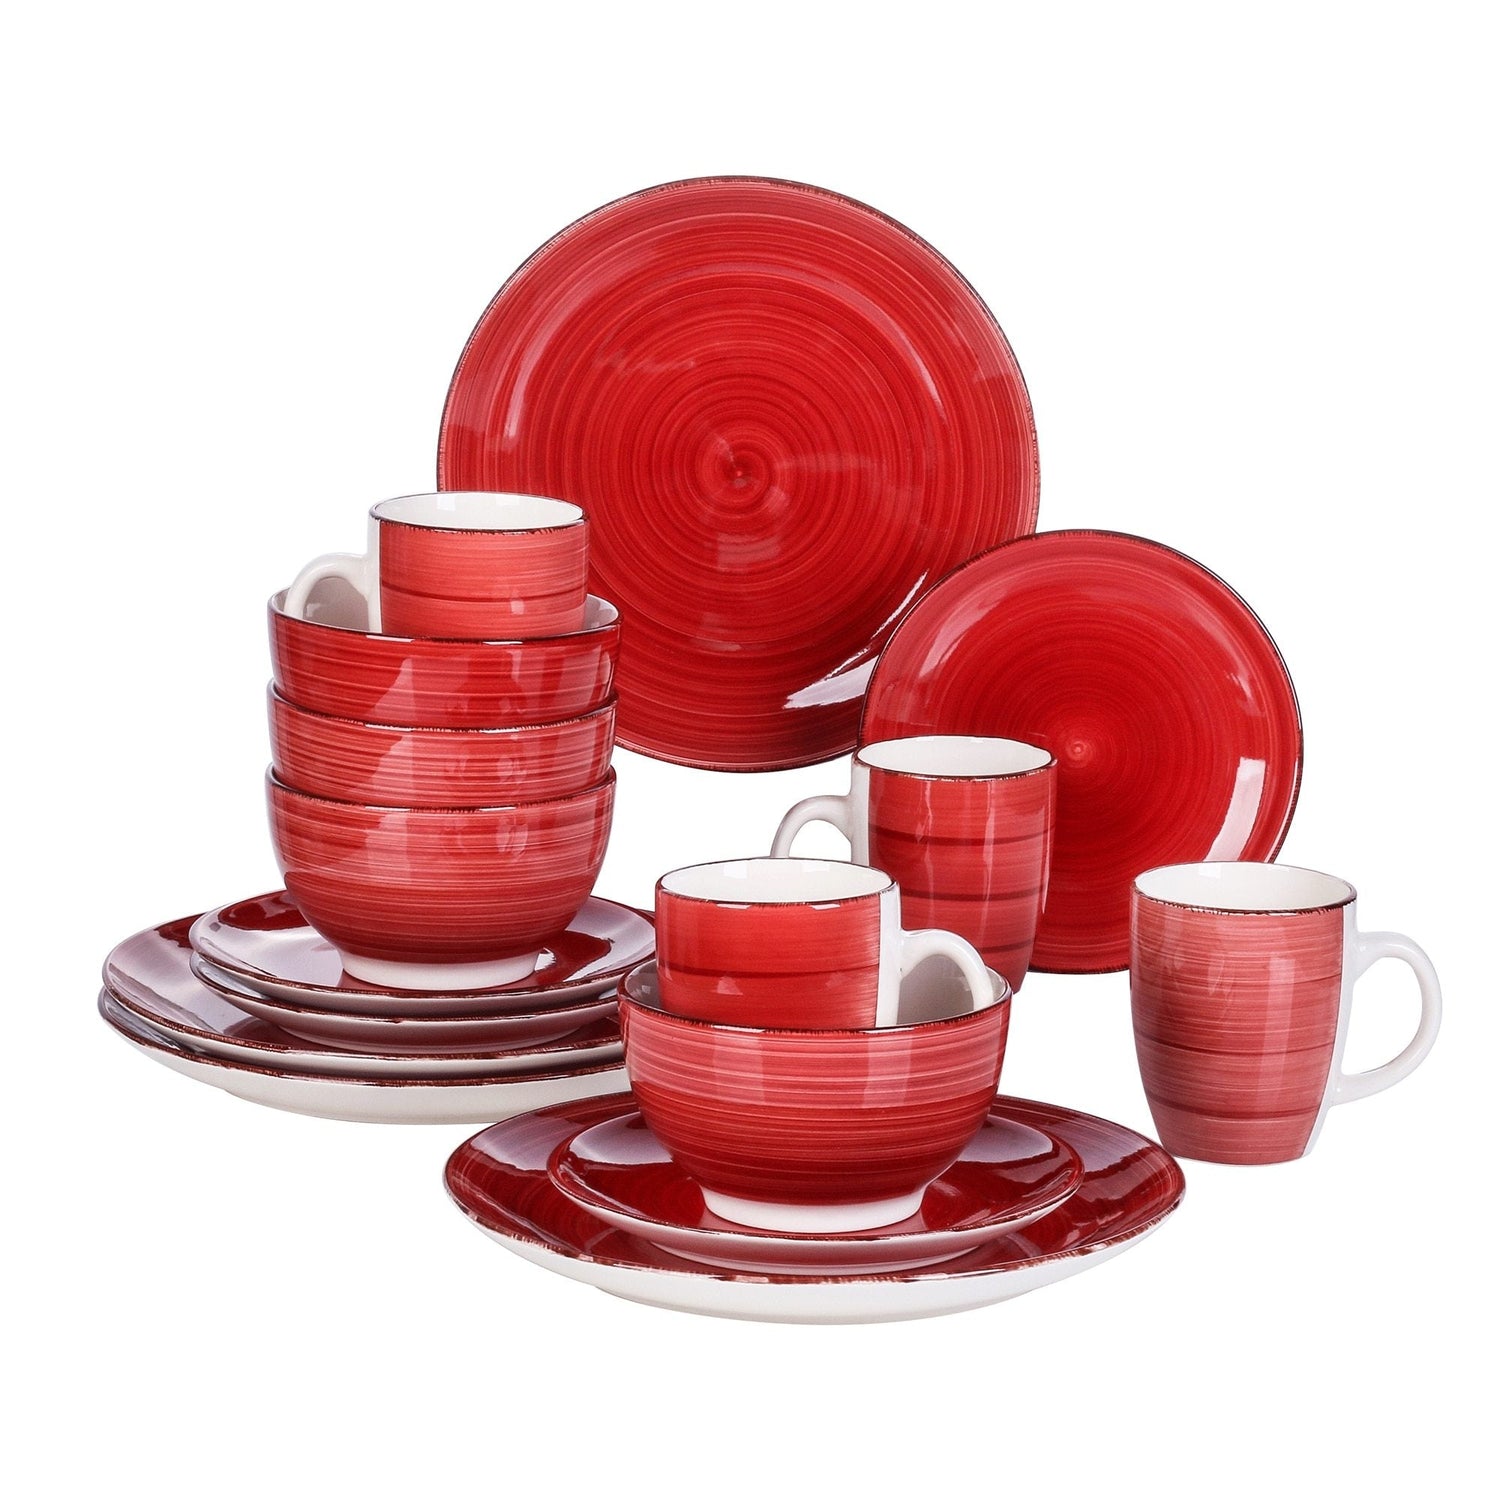 Vancasso Dinnerware Sets, Porcelain Dinner Set for 4, 16-Piece